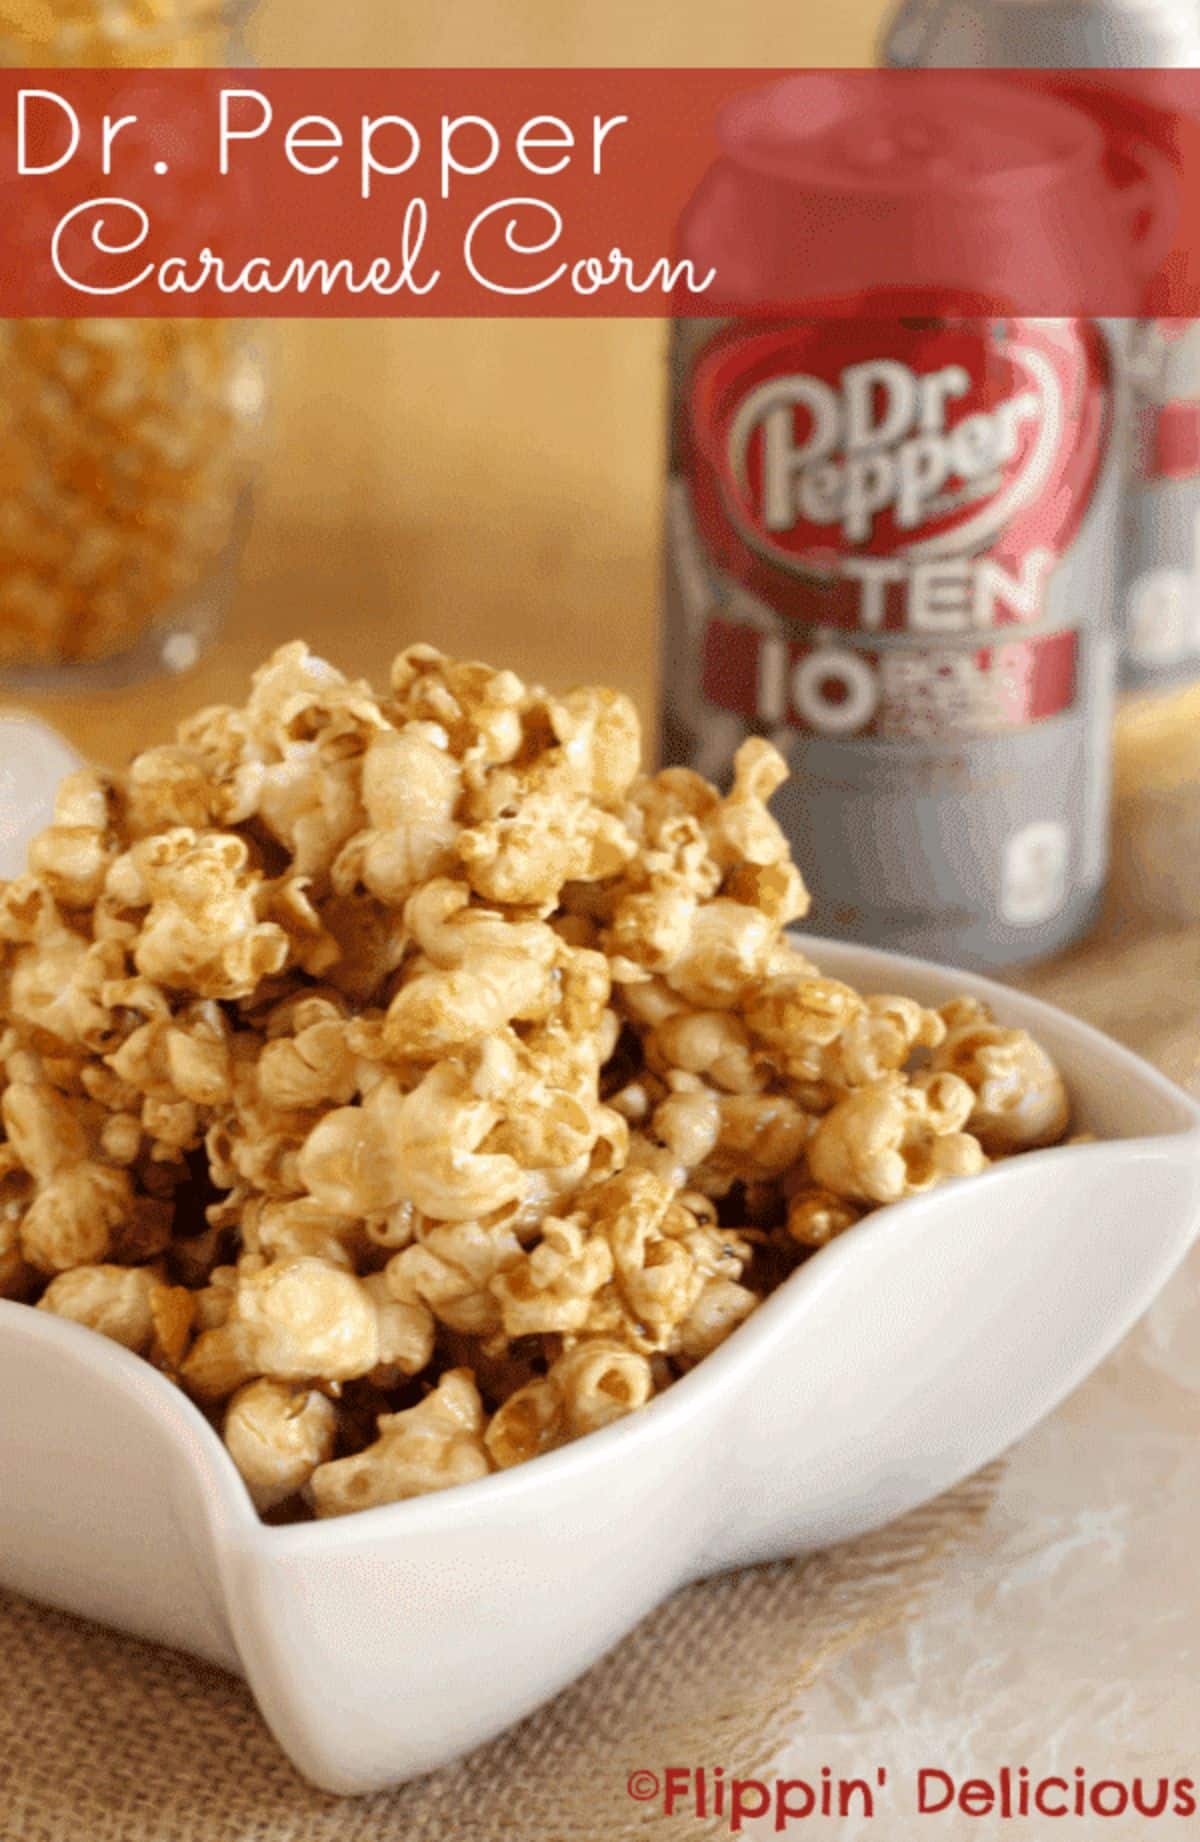 Crunchy Dr. Pepper Ten Popcorn in a white bowl.